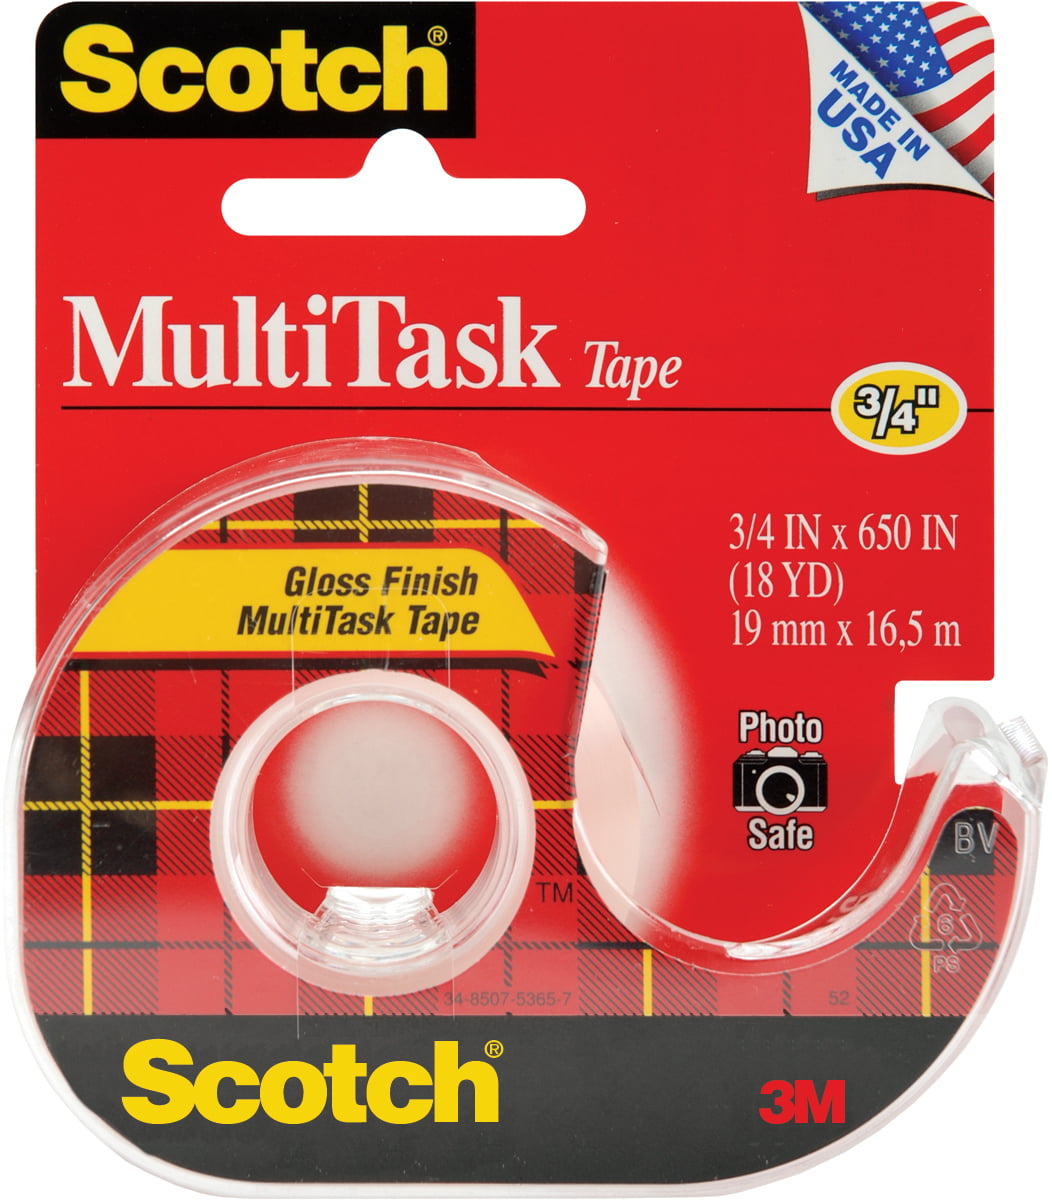 1 Pack 48MM Width x 18 Length 3M 375 Scotch Box Sealing Tape